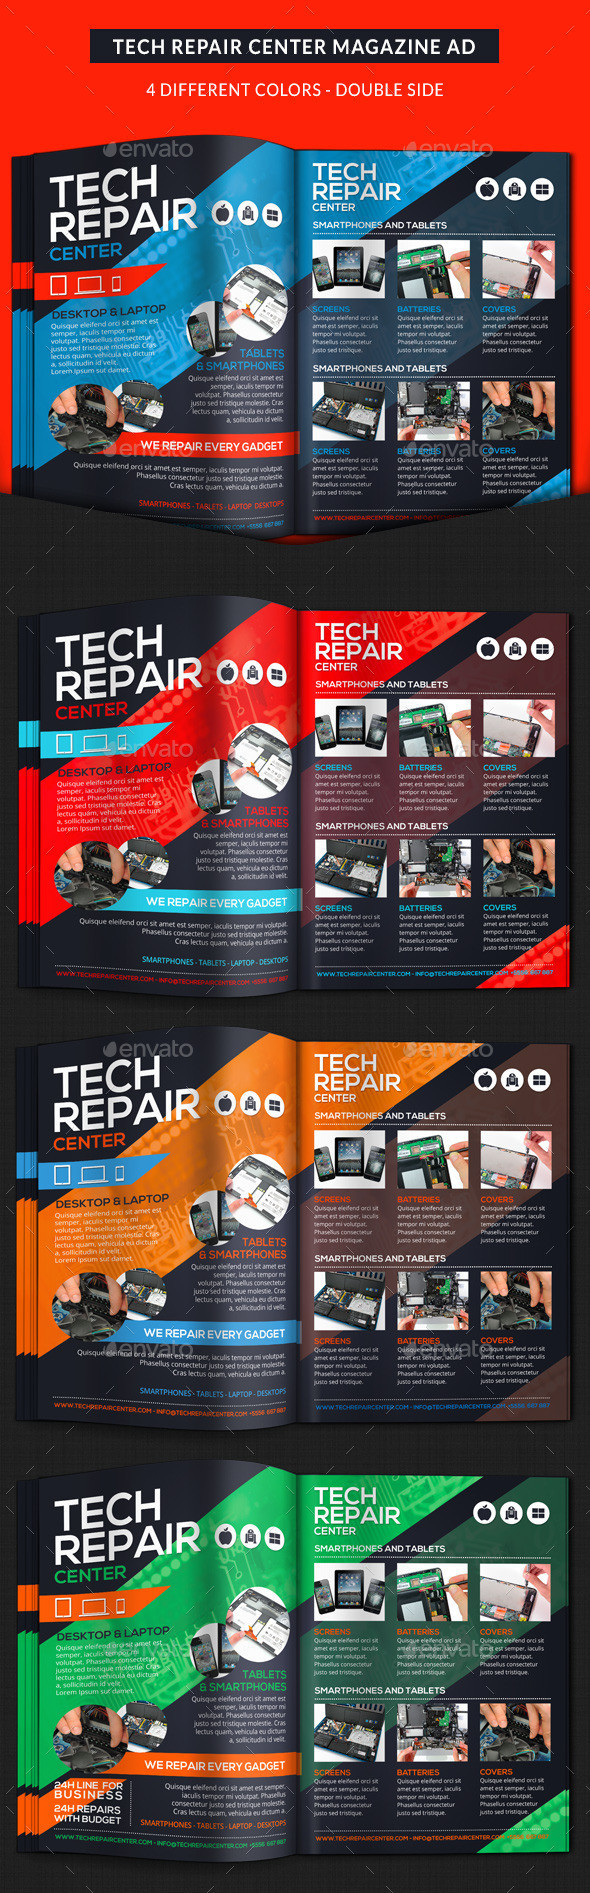 Tech repair center magazine ad showcase